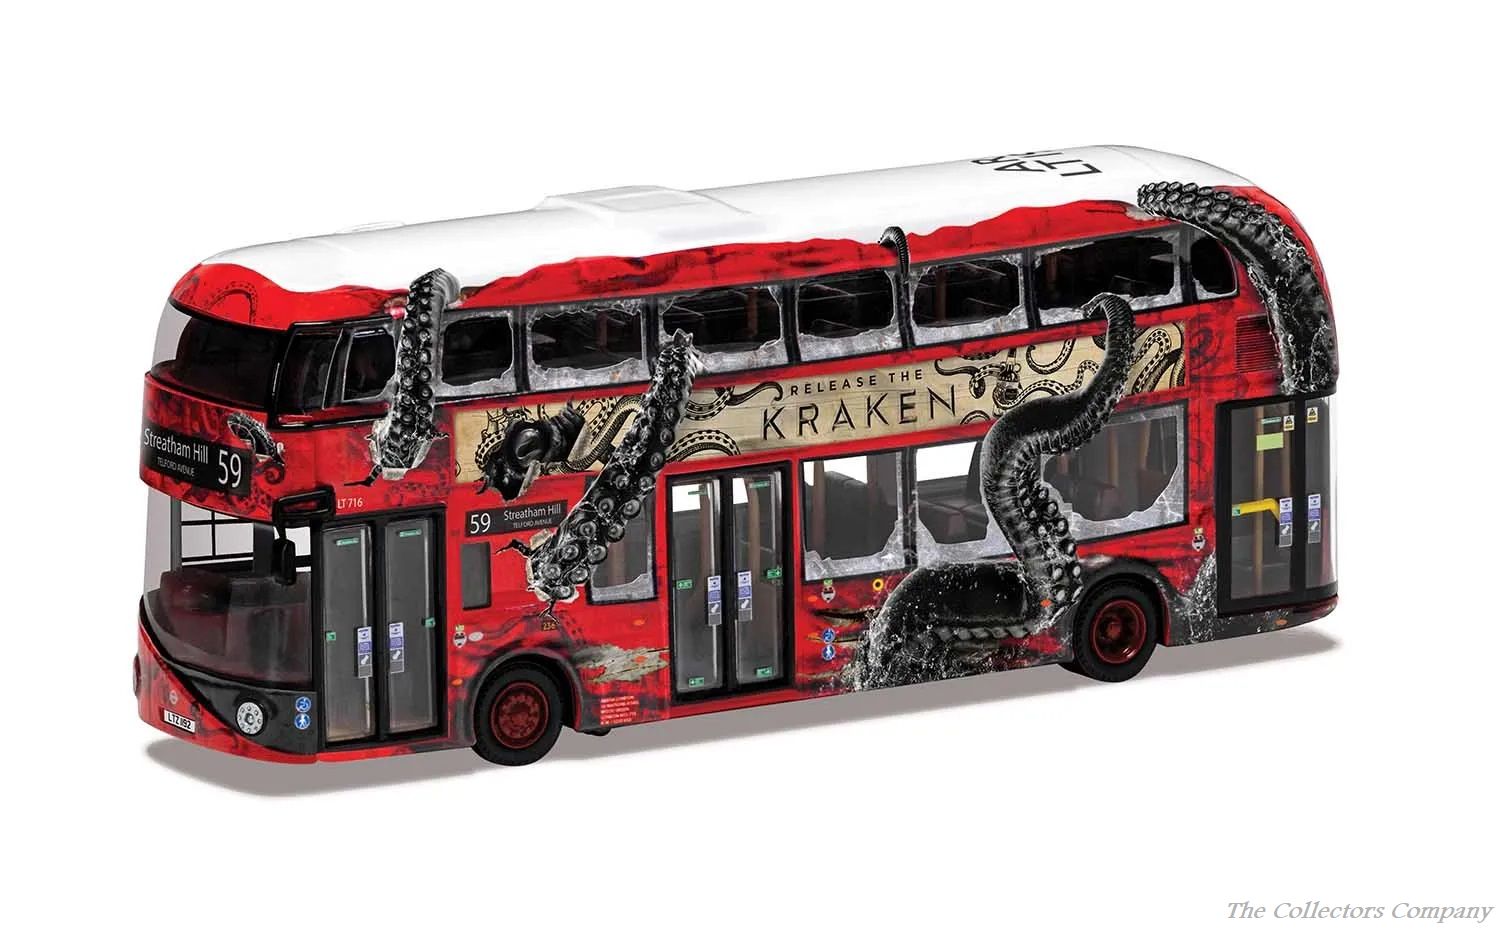 Corgi Wrightbus New Routemaster Arriva London, LTZ 1716, Route 59, ‘Release the Kraken’, dual destination OM46638B